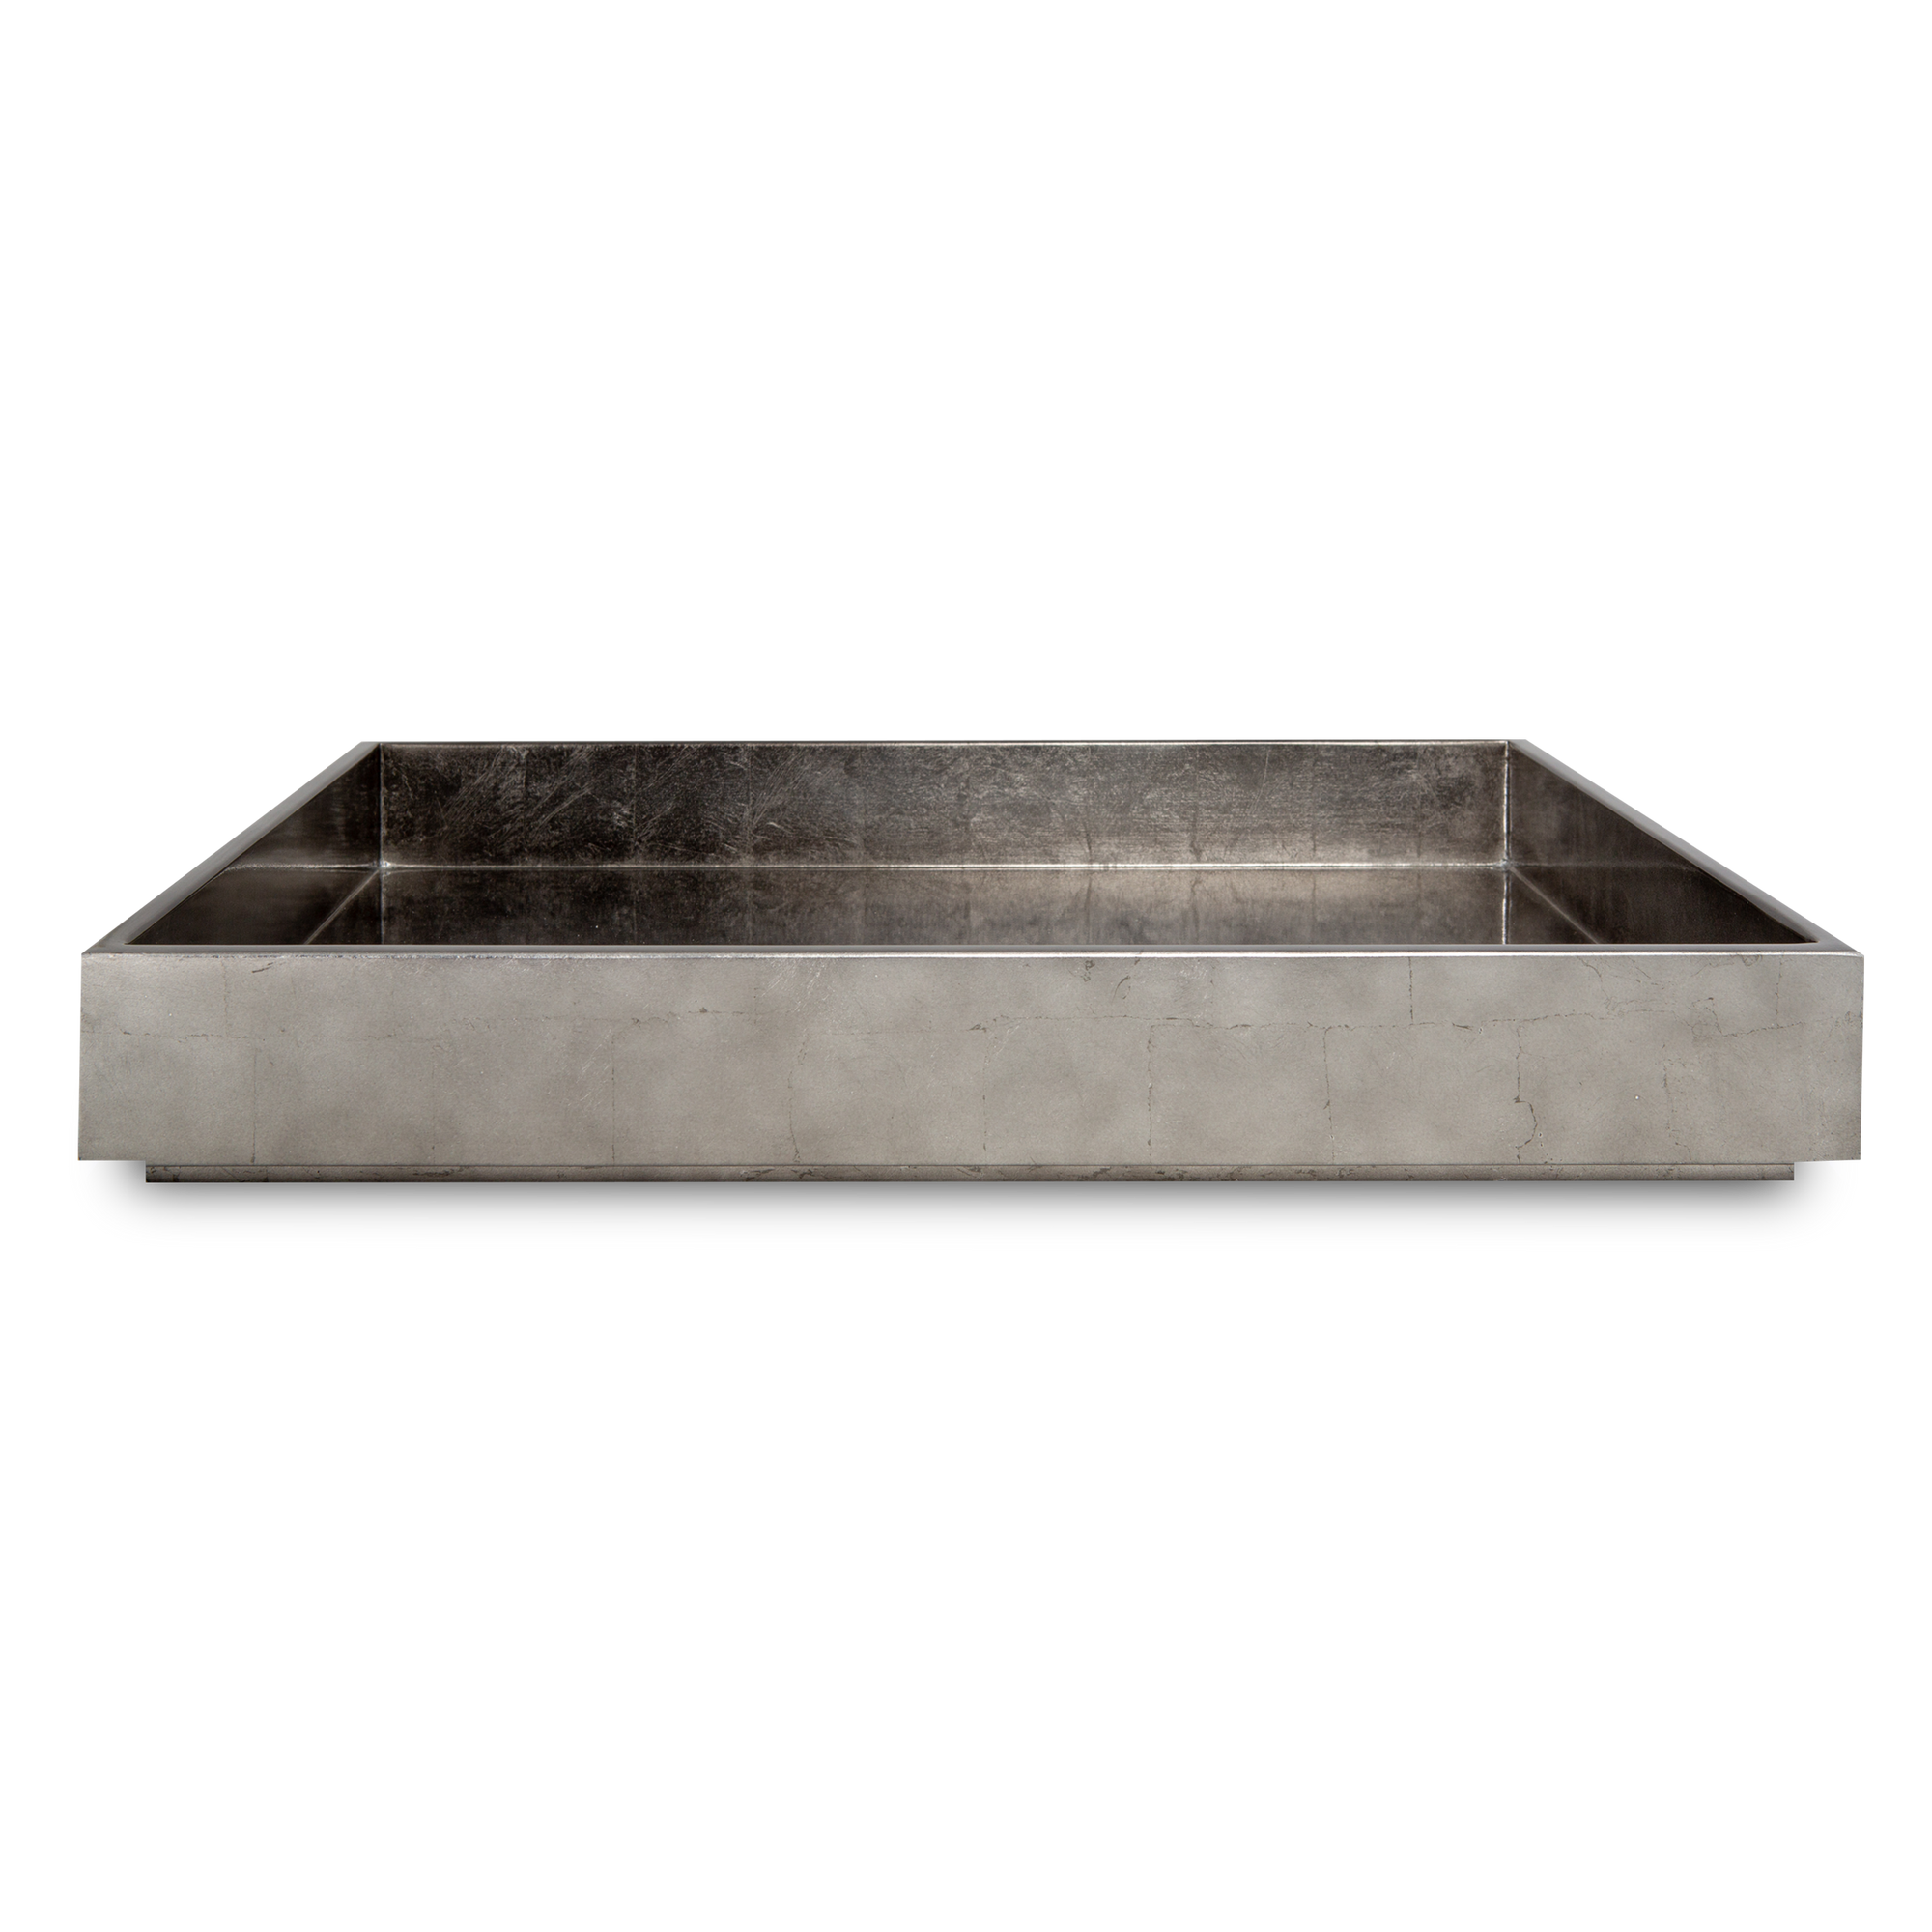 This elegant tray features a gunmetal silver leaf finish.